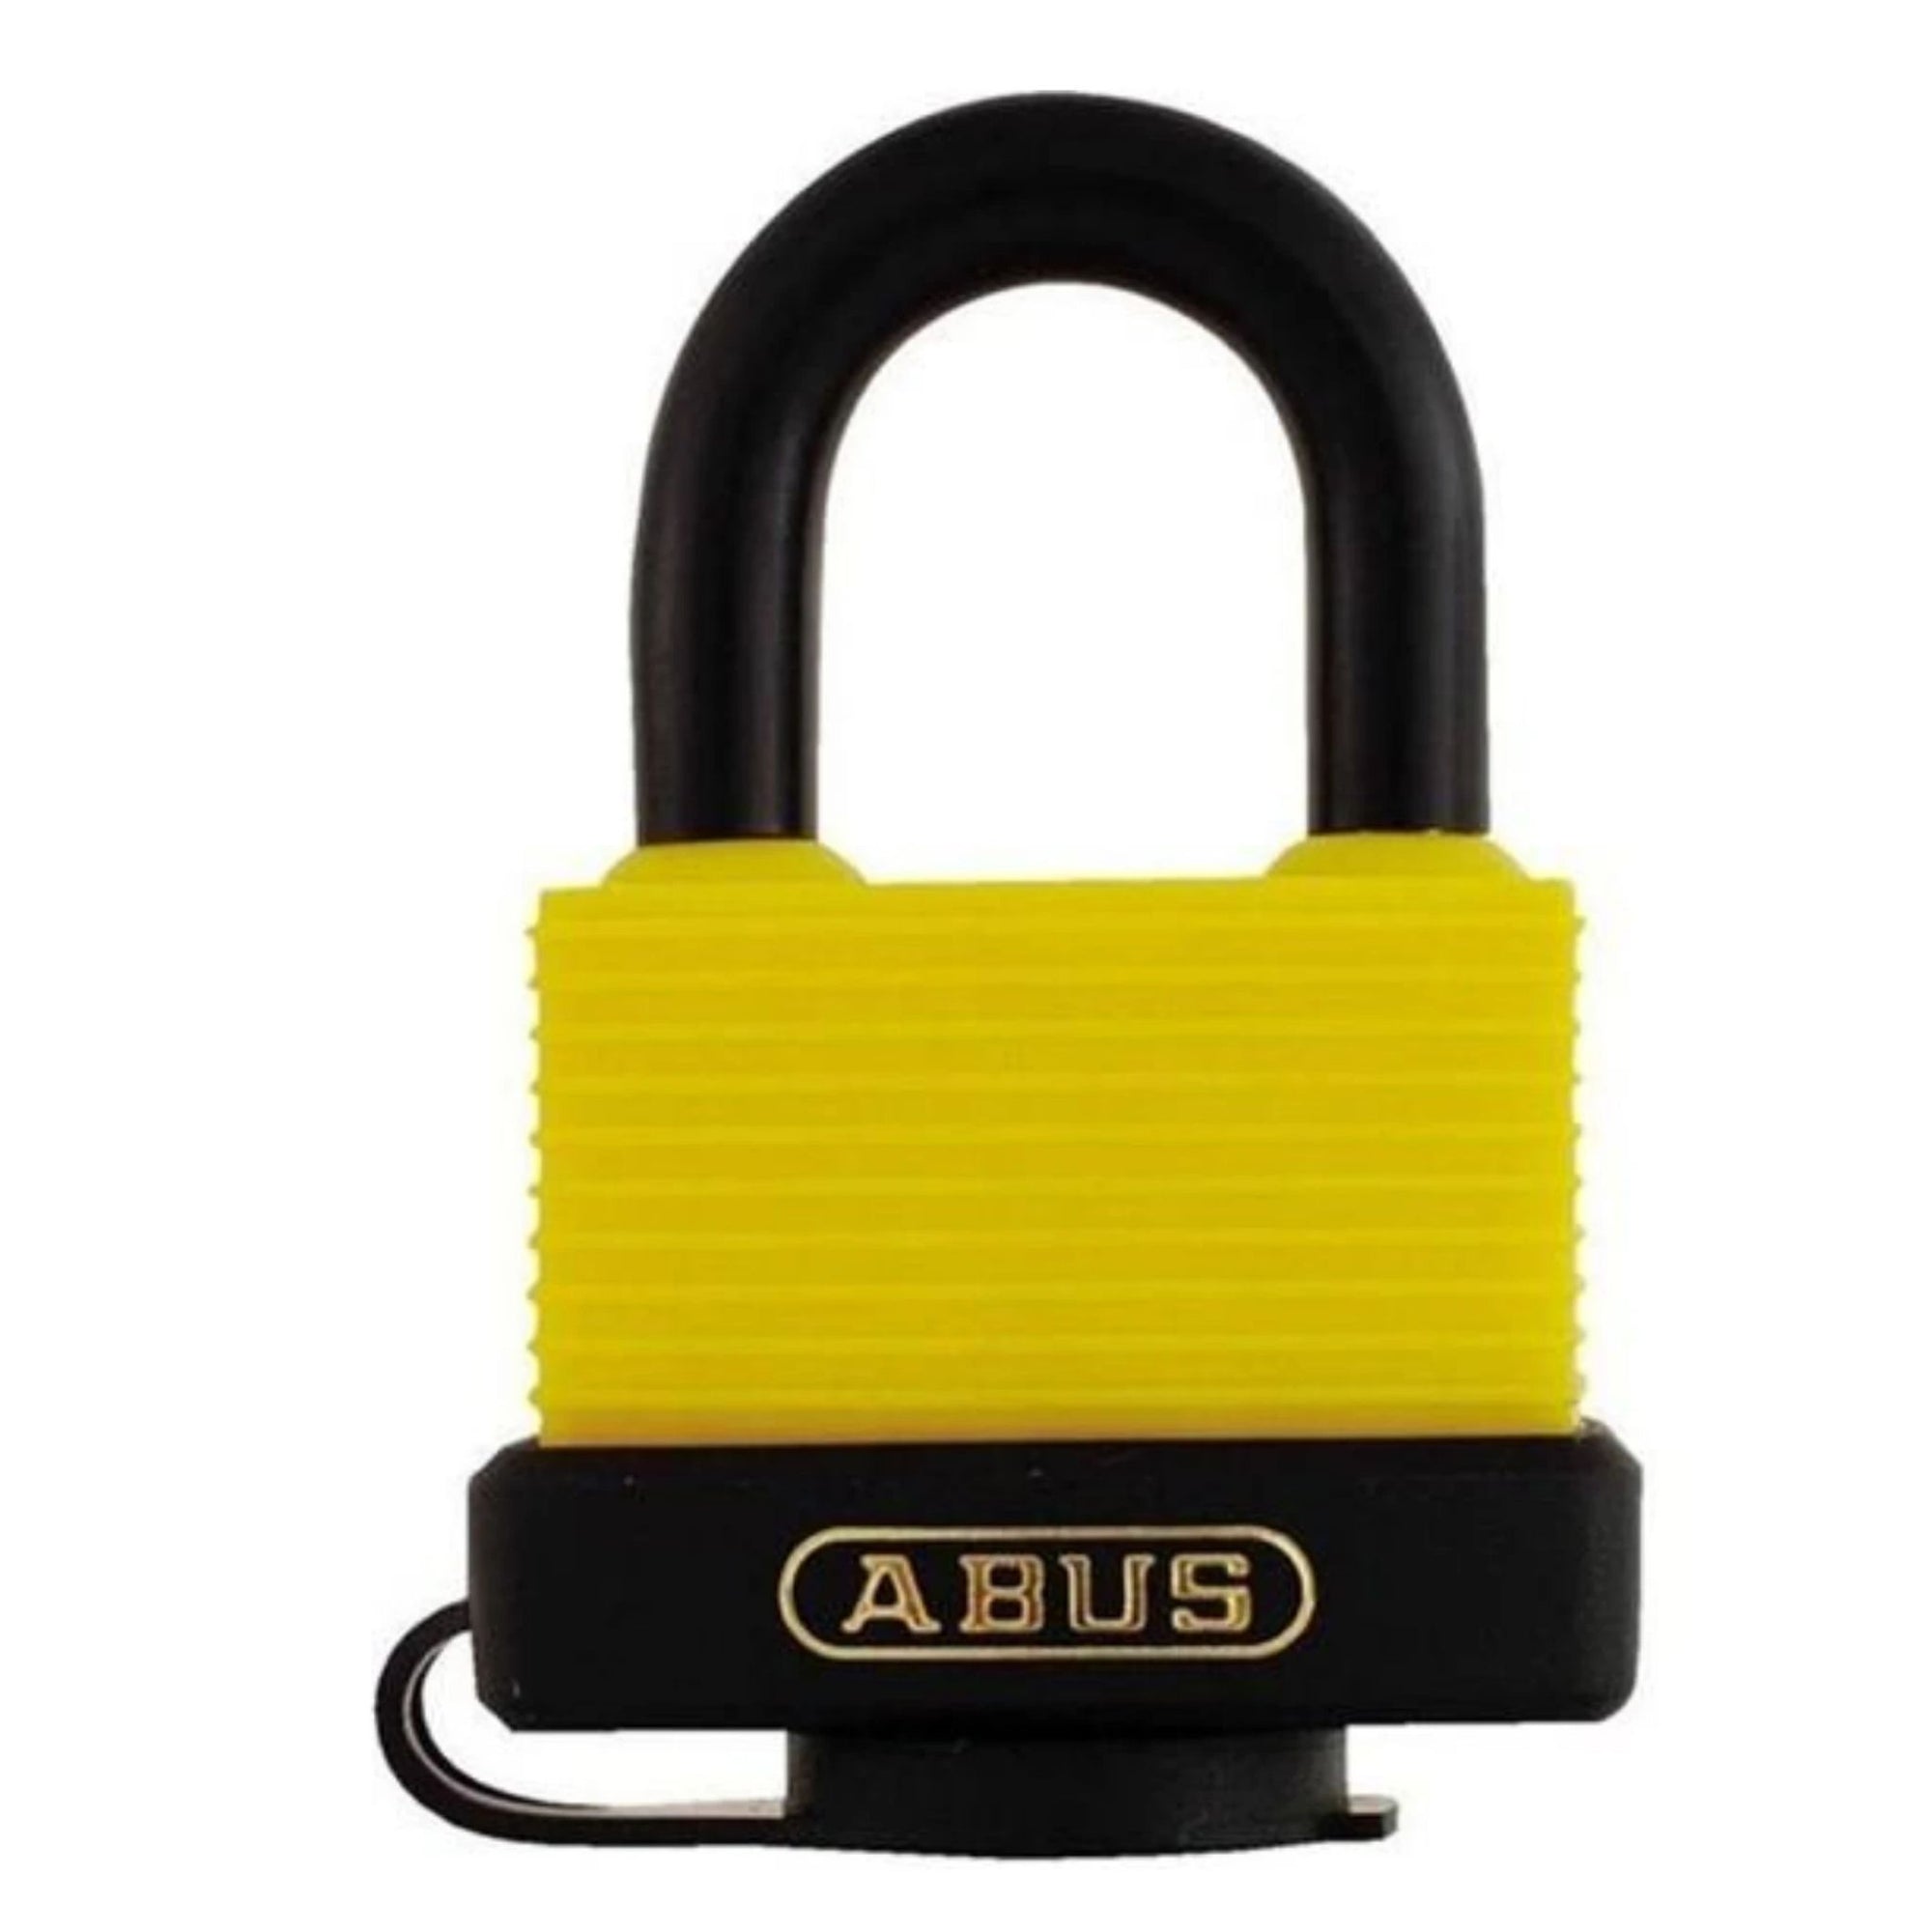 Abus 70/45 KA 7451 Lock Keyed Alike Weatherproof Brass Padlocks Keyed Alike to Match Existing Key Number KA7451 - The Lock Source